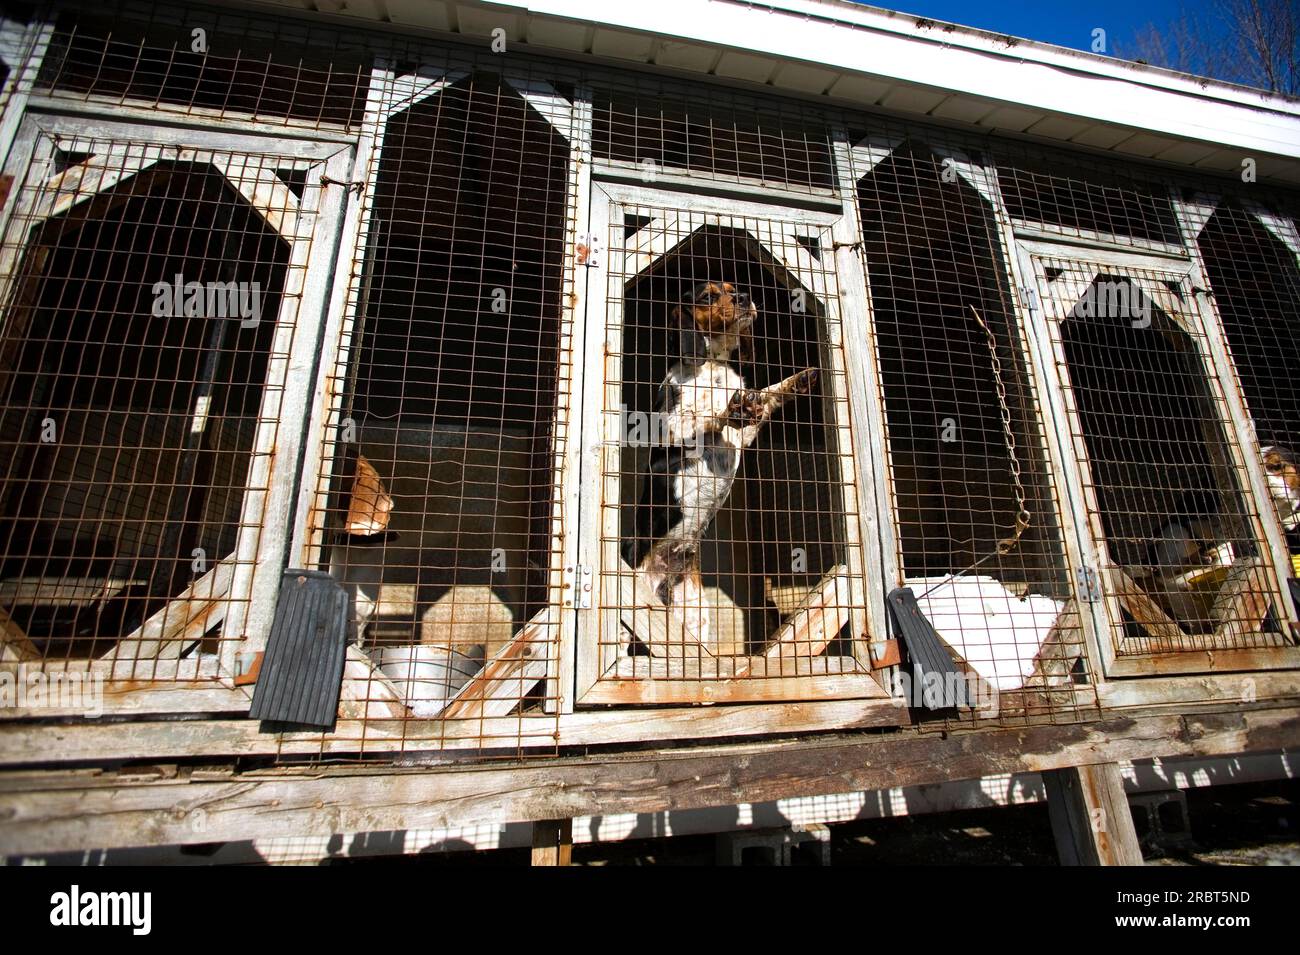 Beagles in the kennel, St. Pierre de Sorel, Quebec, Canada Stock Photo